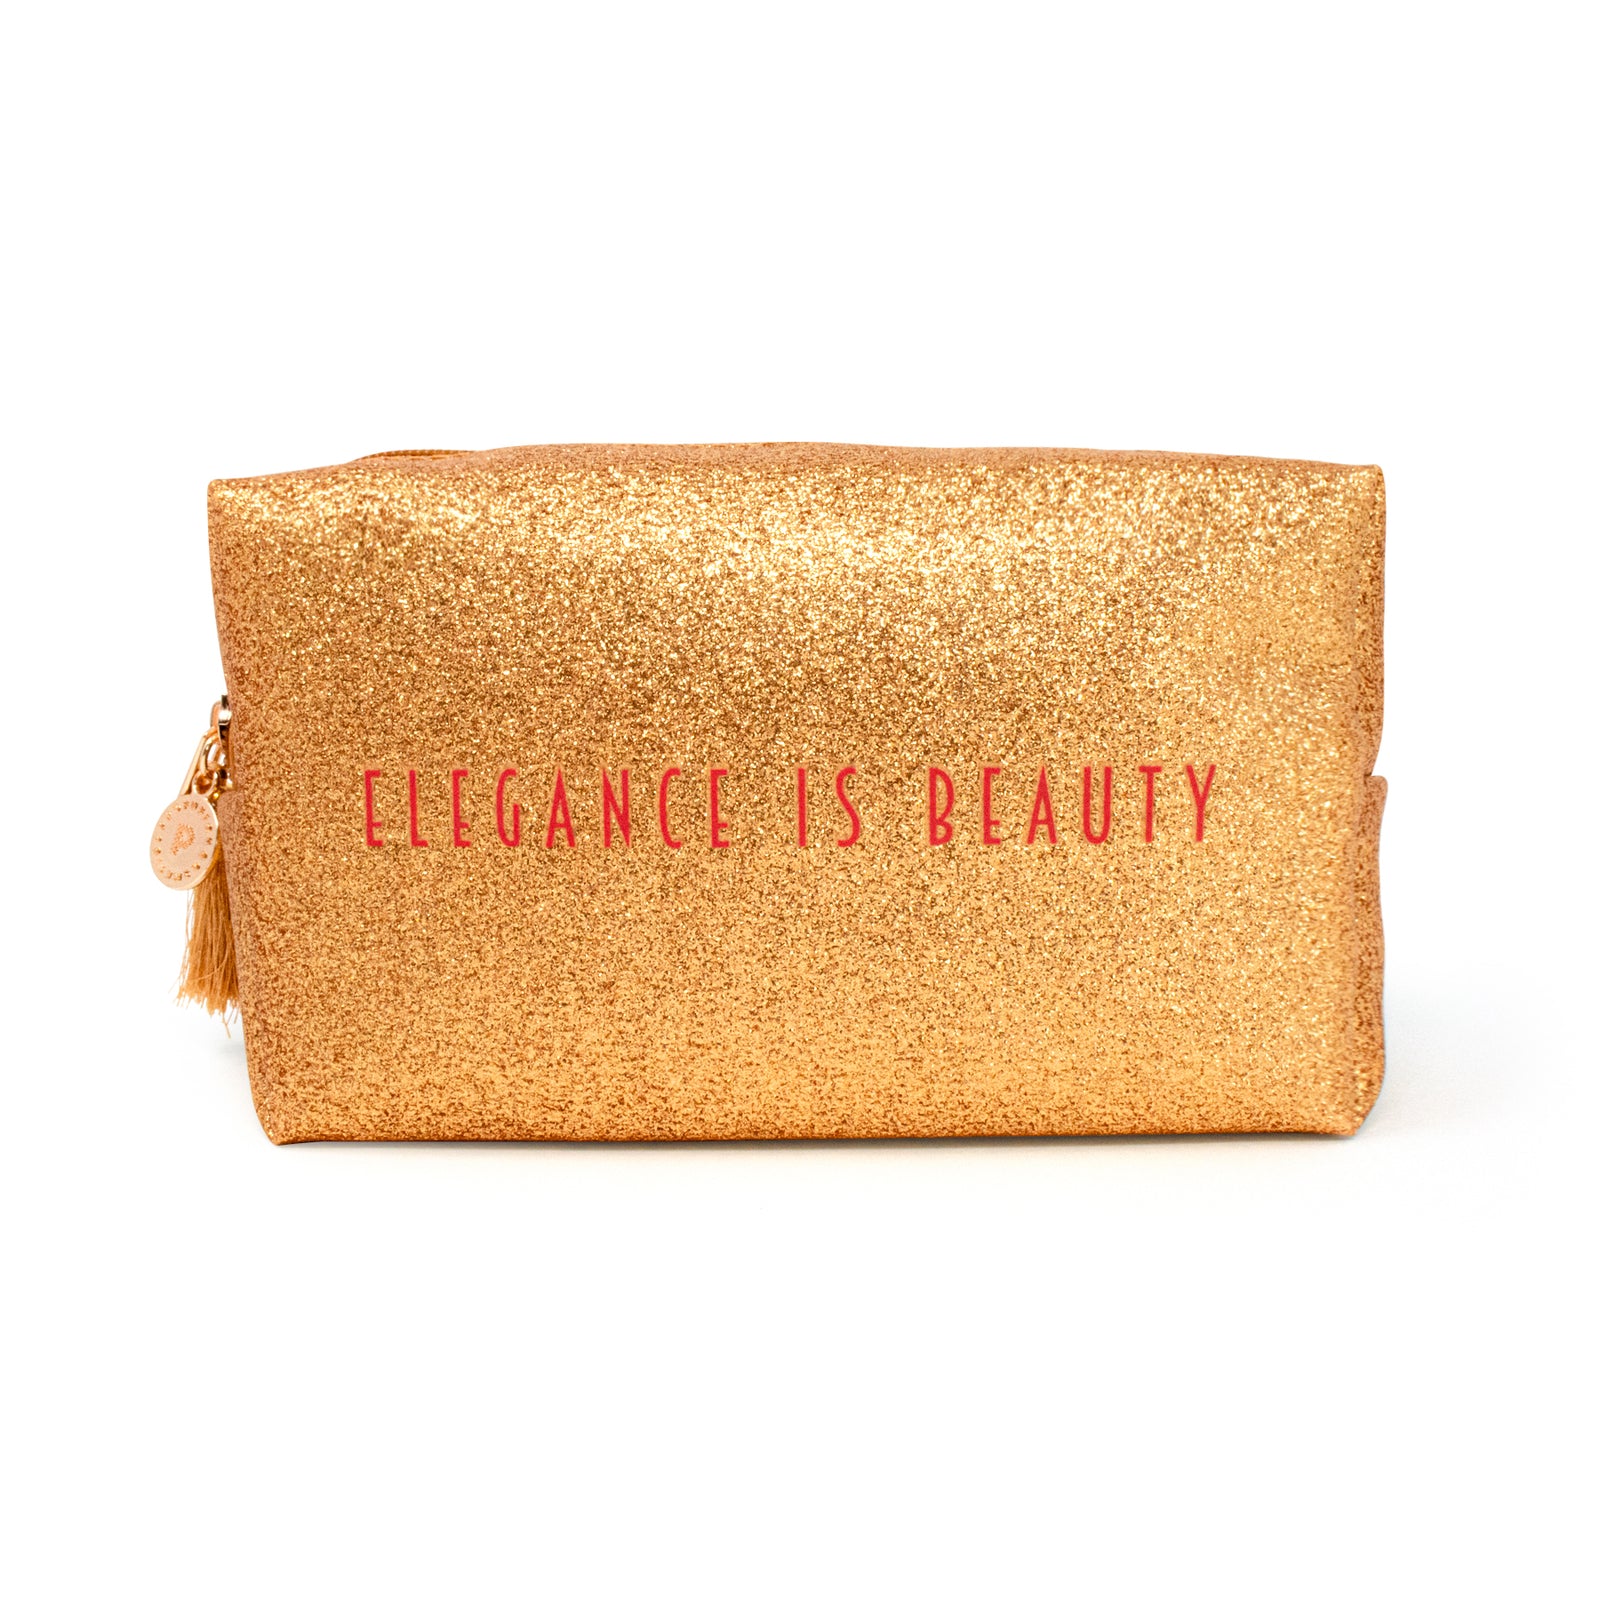 Elegance is Beauty Cosmetic Bag